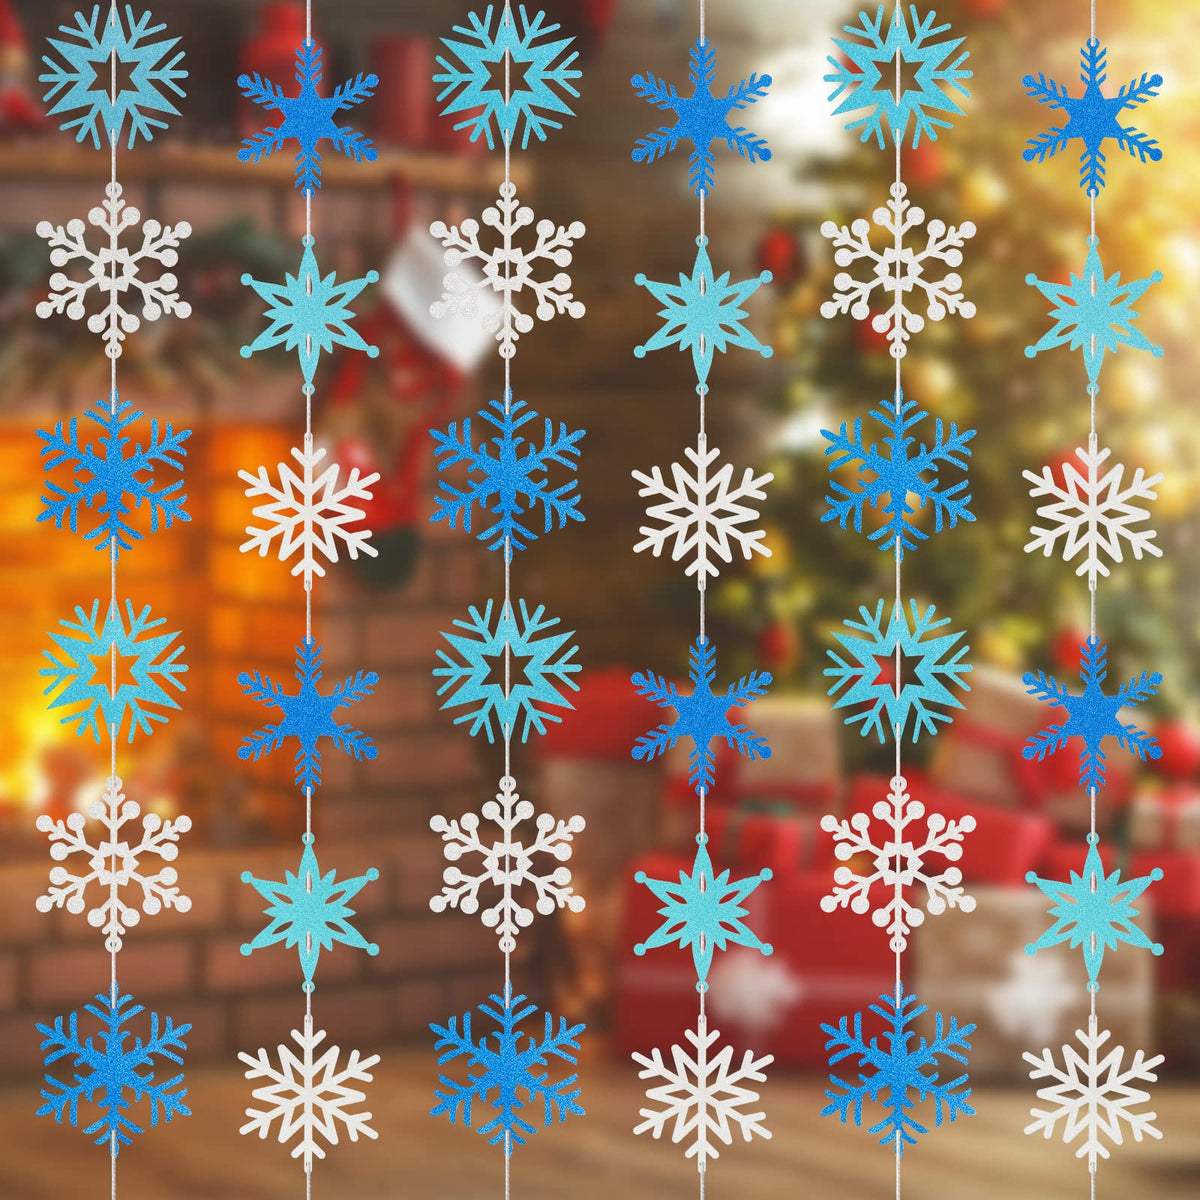 LovesTown 12PCS Winter Snowflake Decorations, Glittery Christmas